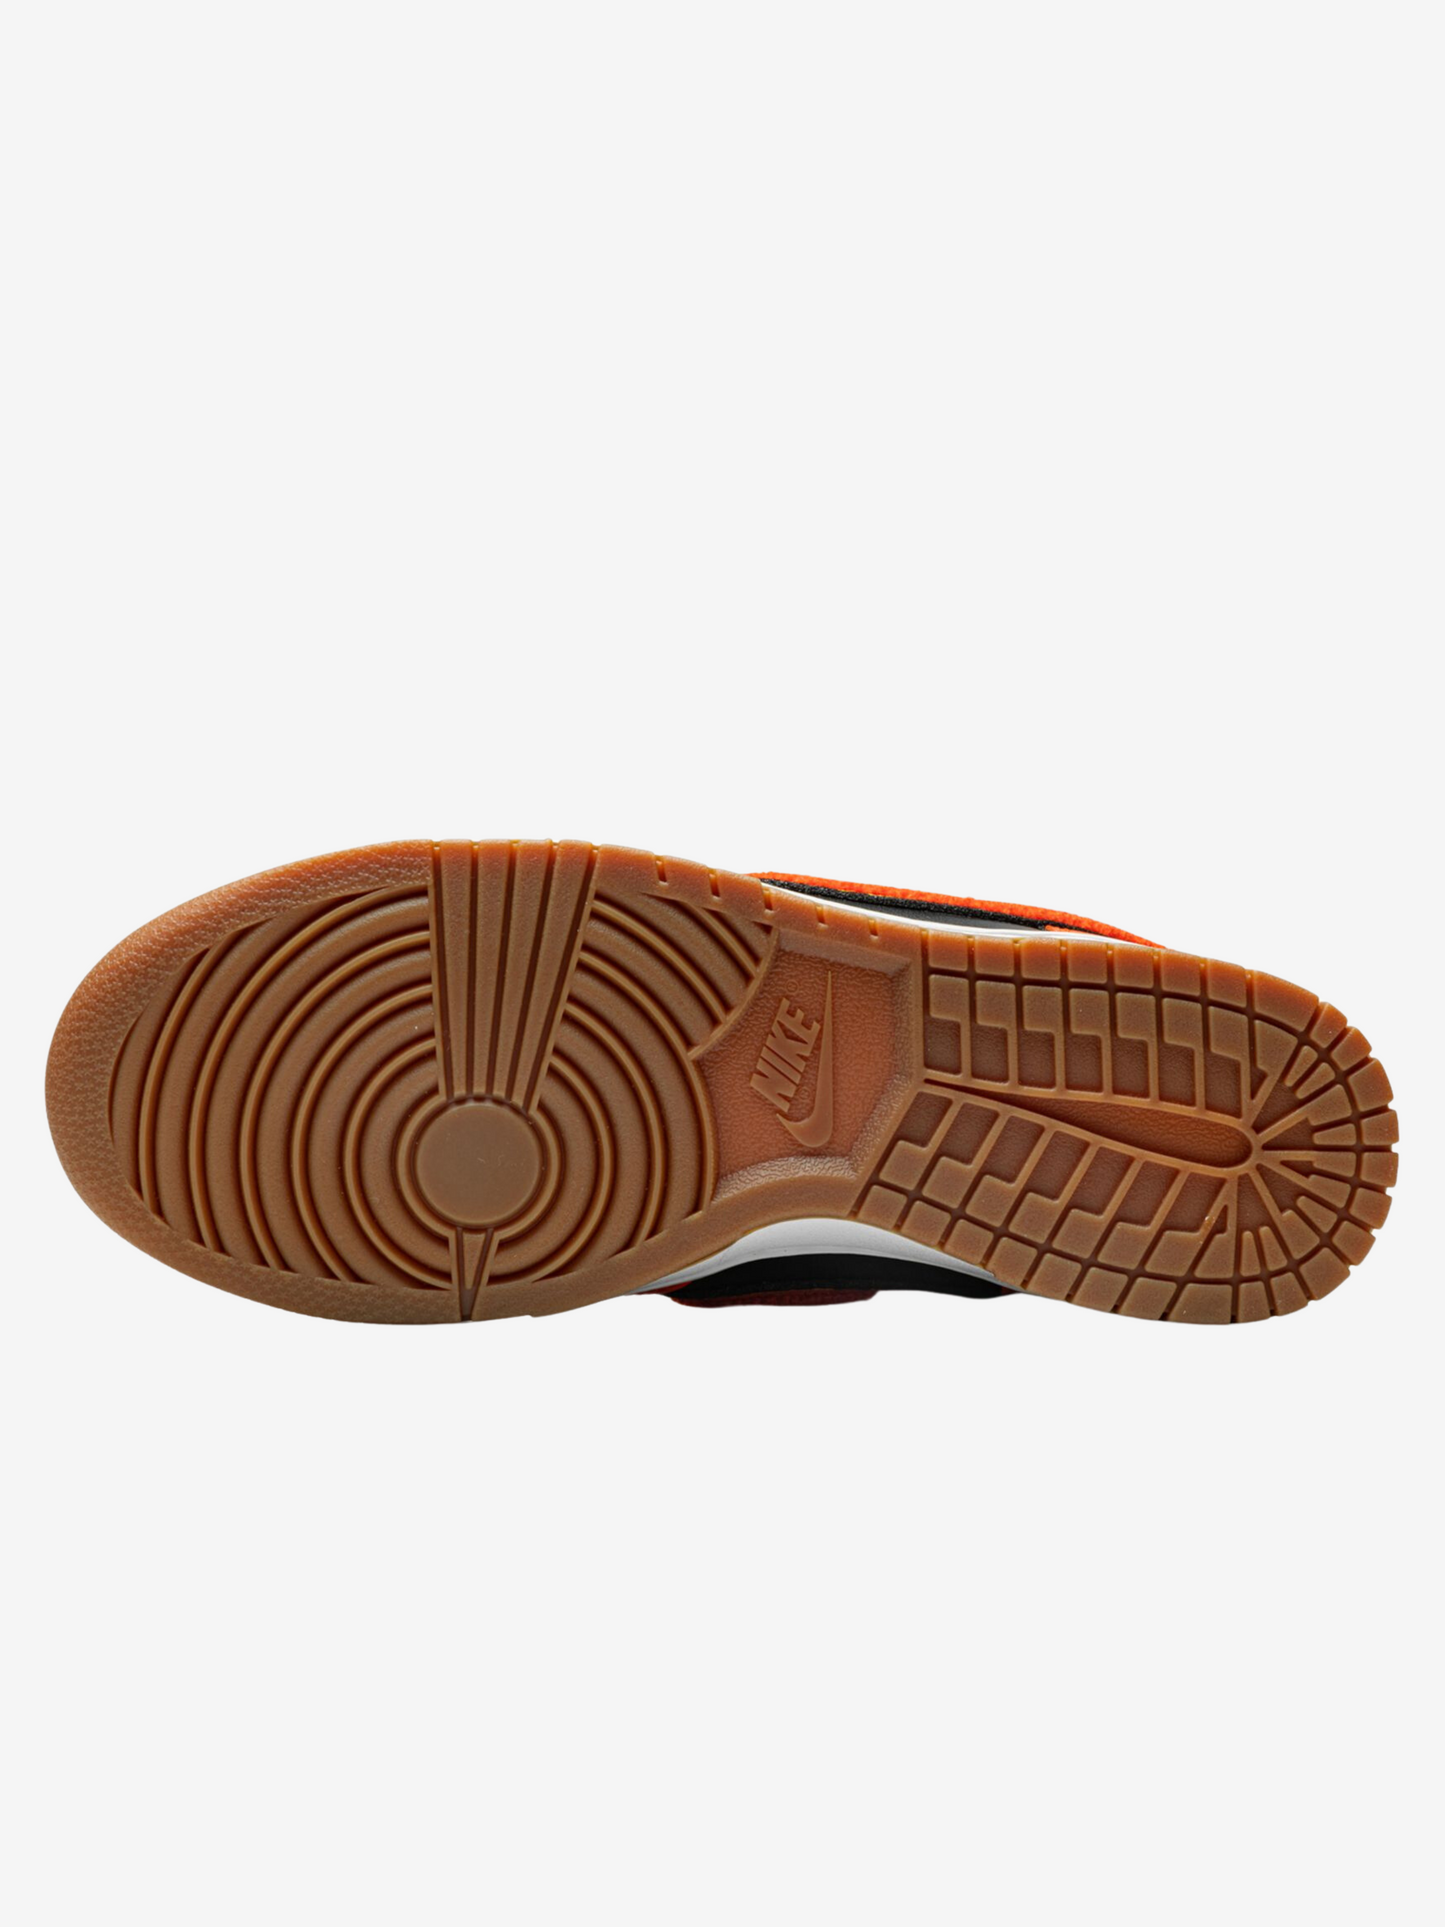 Nike High Dunk Chenille Swoosh Shoes - Safety Orange & Black Size 10